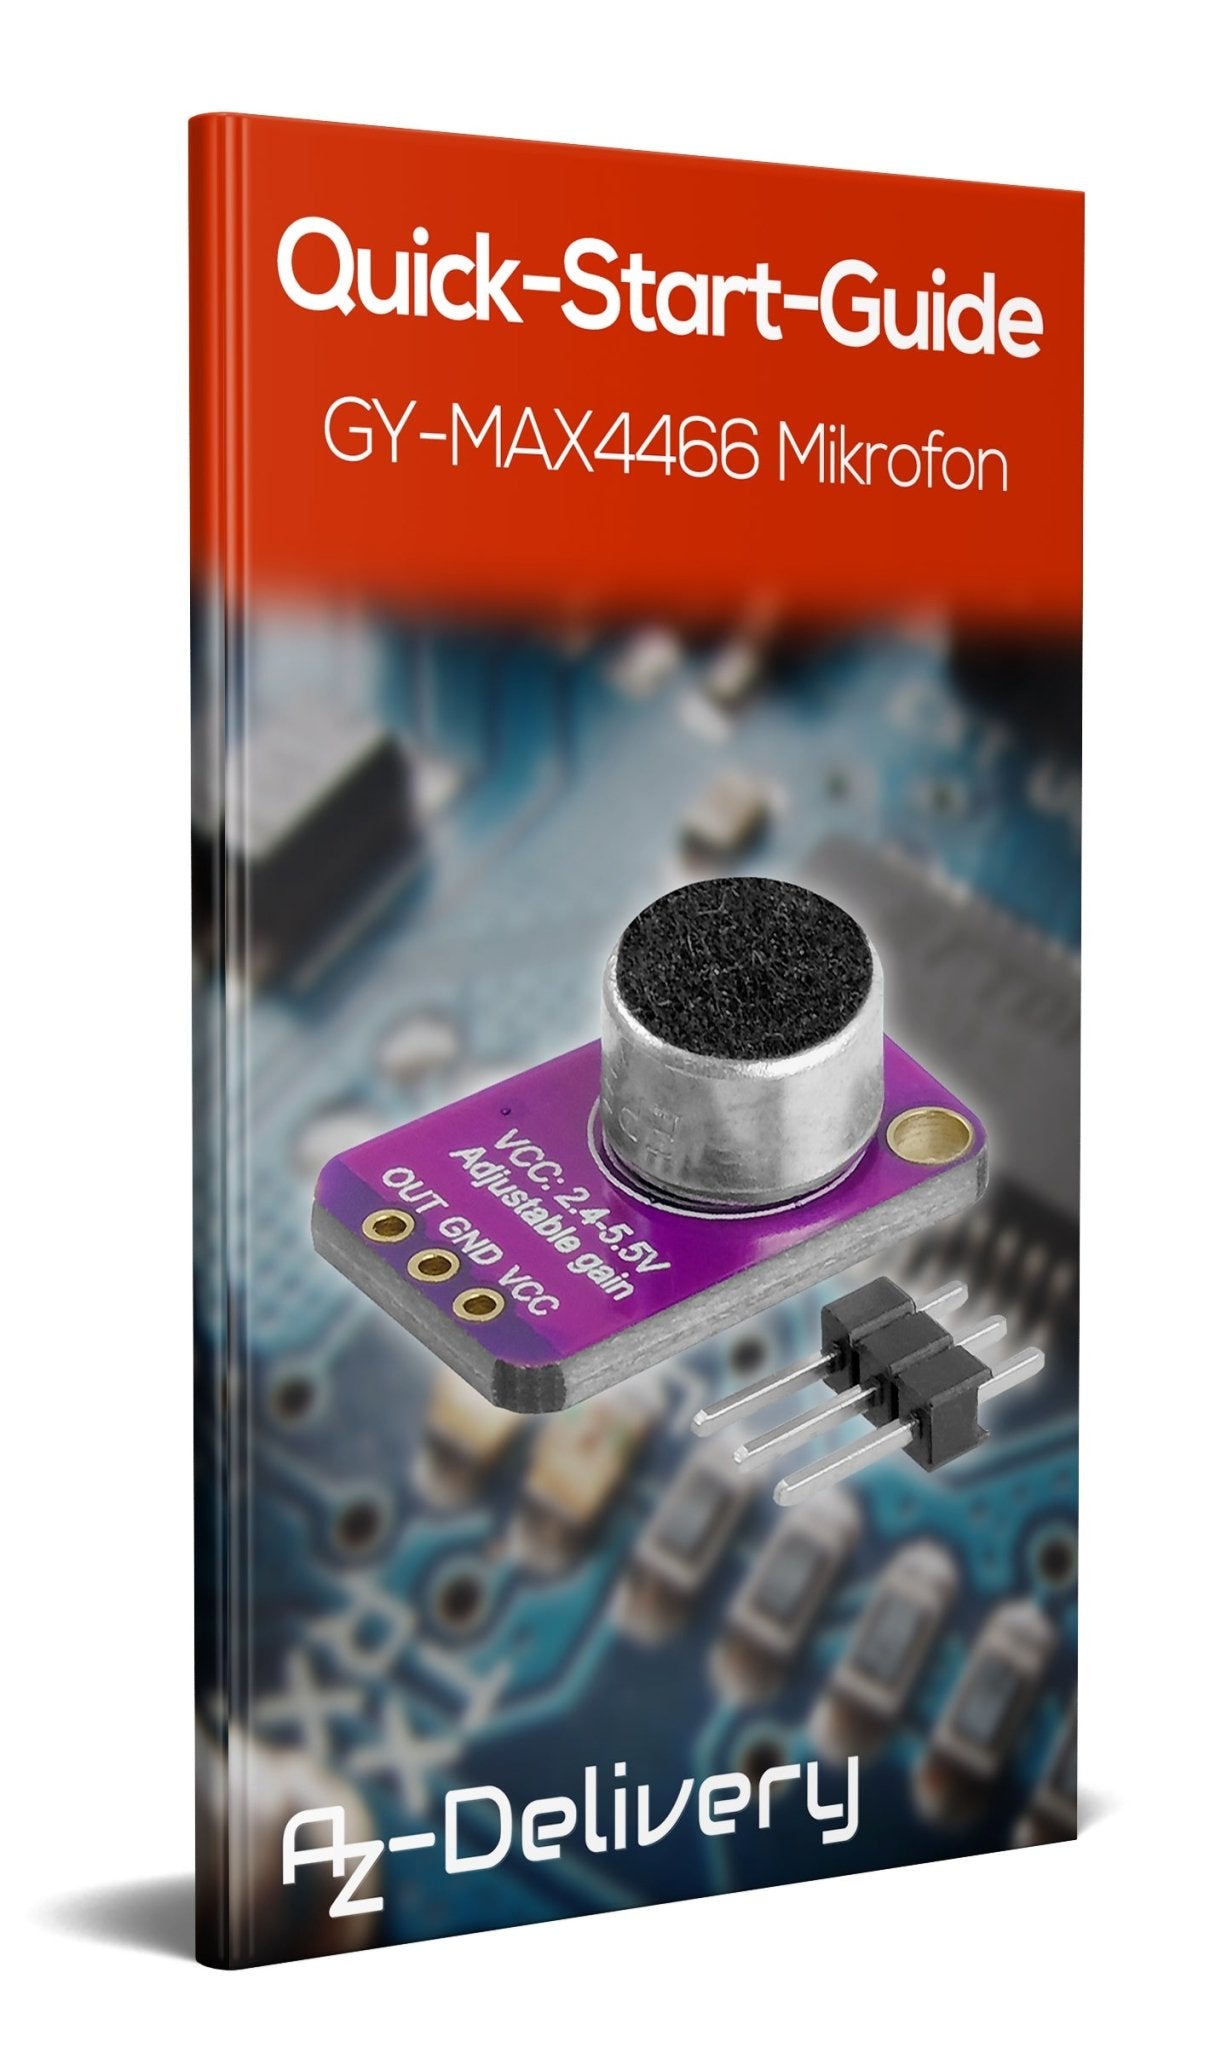 GY-MAX4466 Elektret Mikrofon, Verstärker Breakout Sensor - kompatibel mit Raspberry Pi - AZ-Delivery